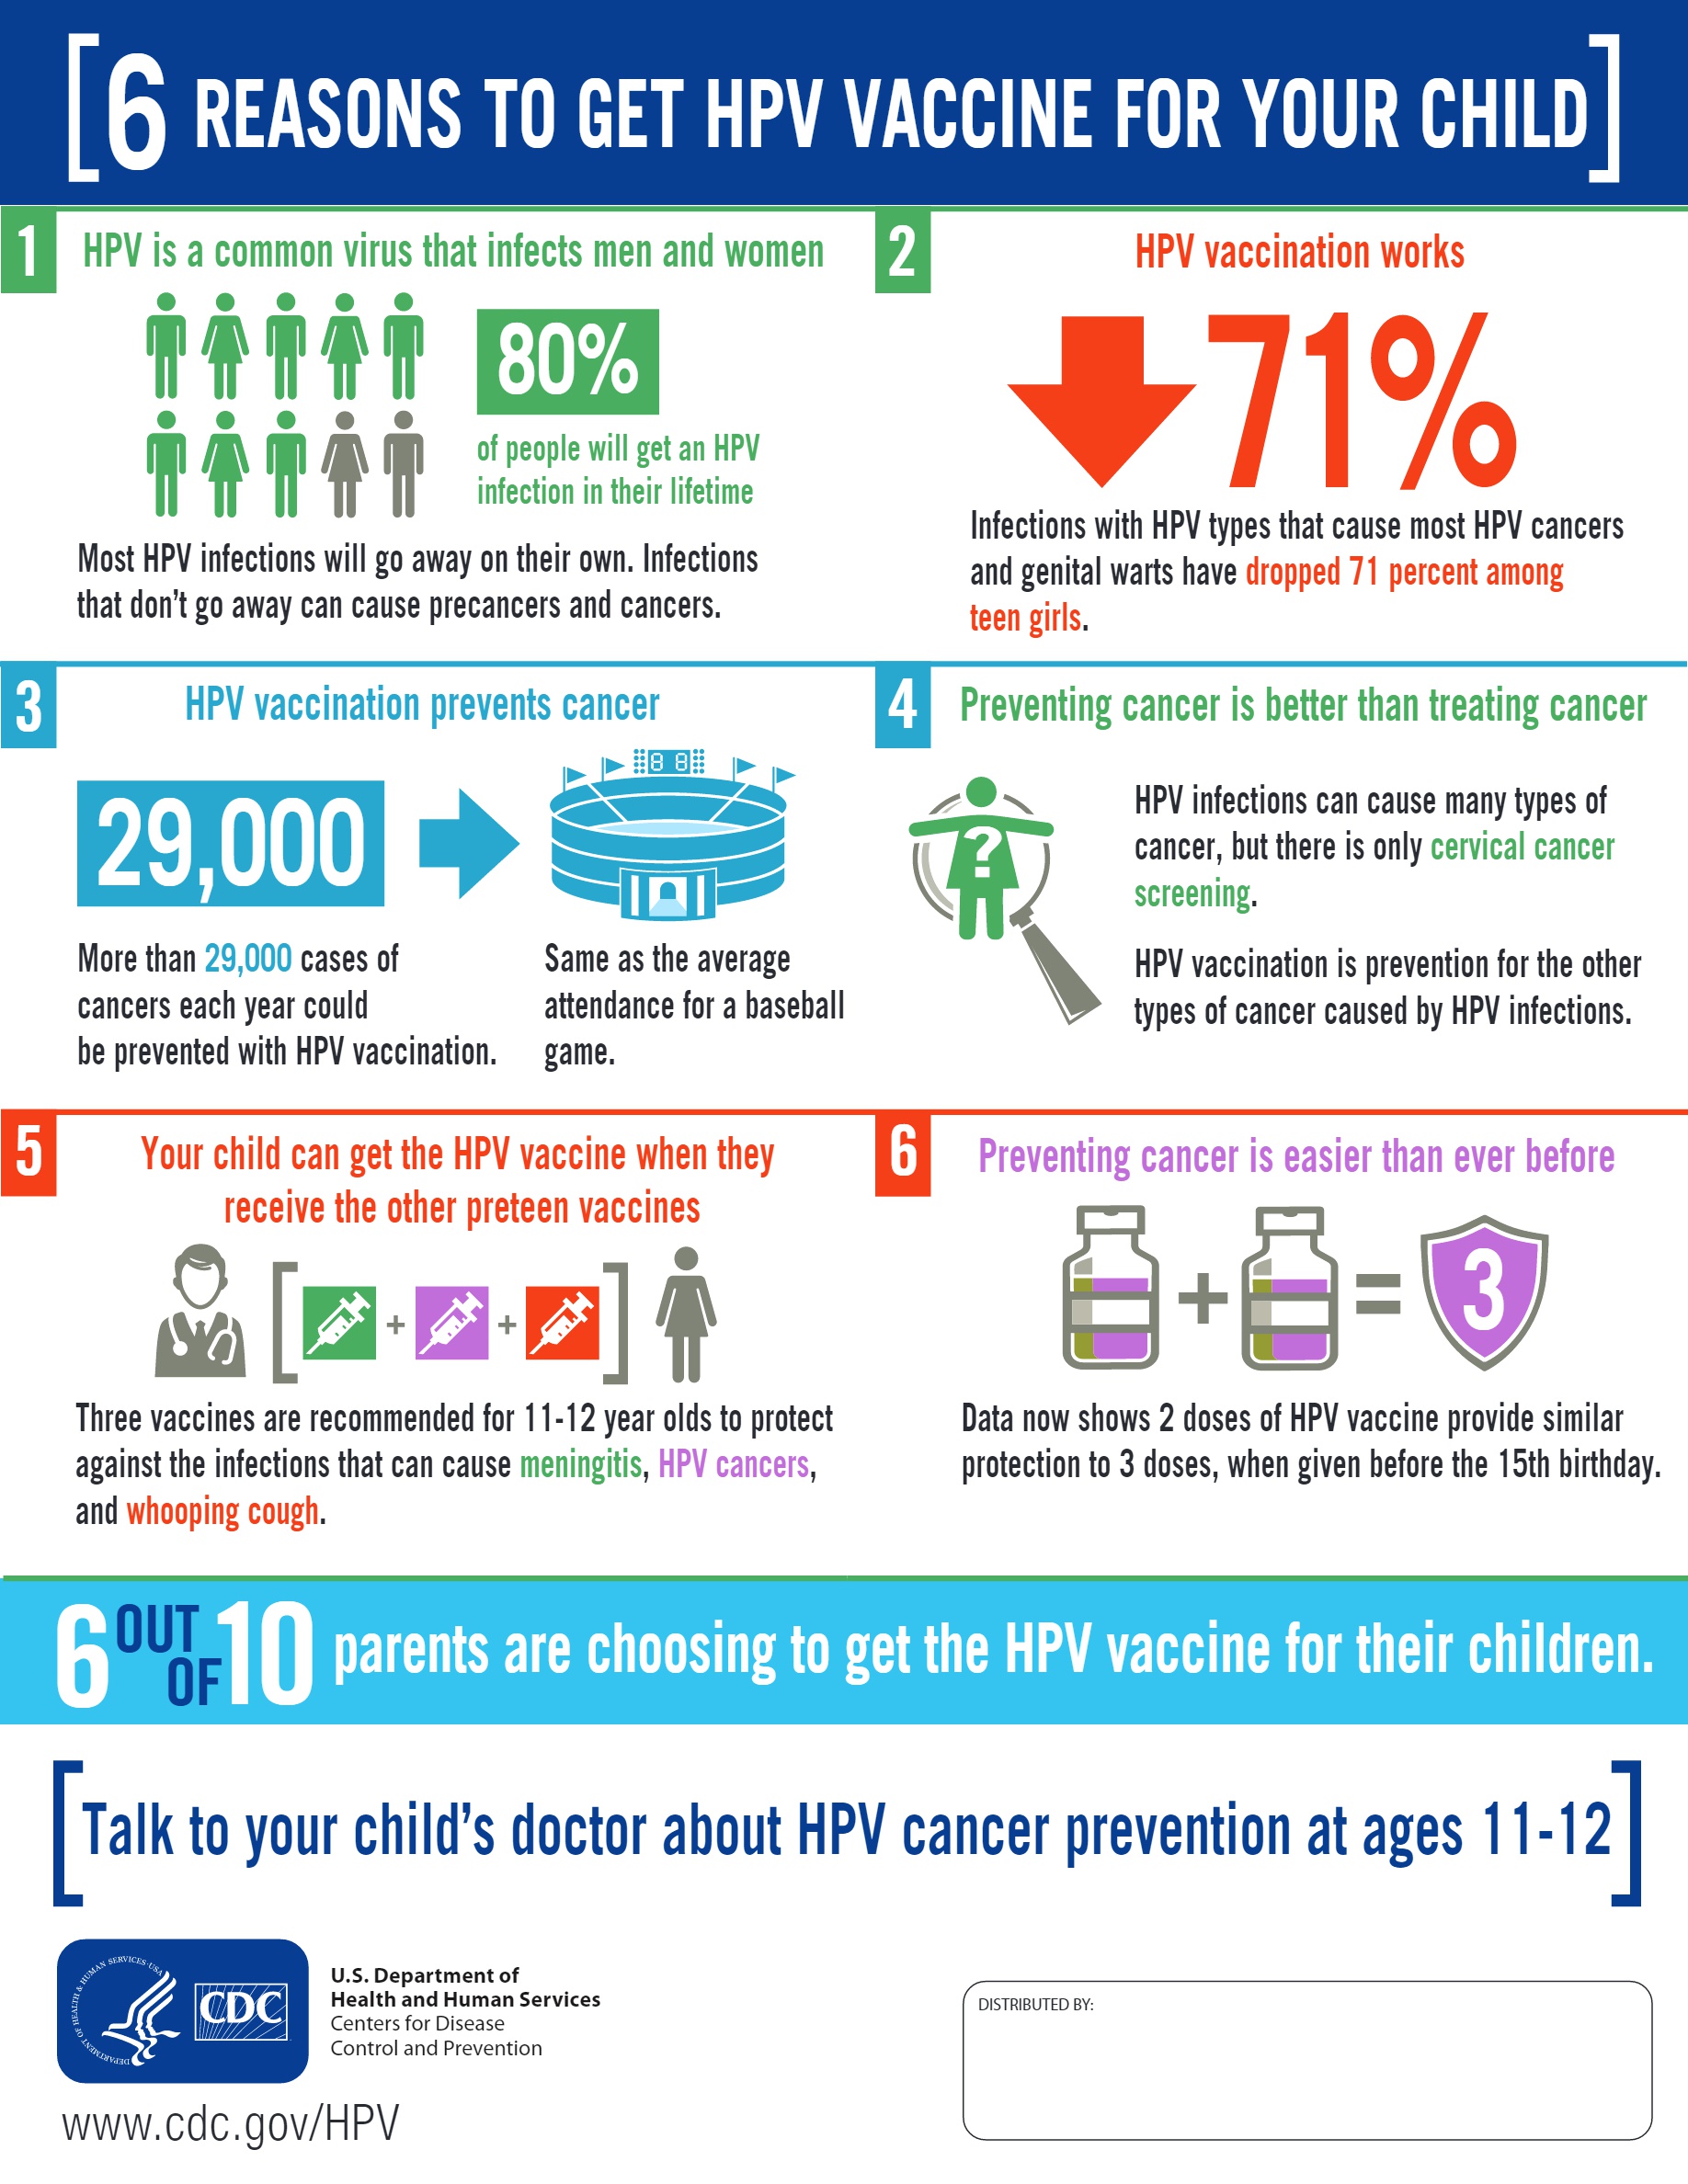 Human papillomavirus vaccine facts, Bill Gates announces first Vaccine Innovation Award